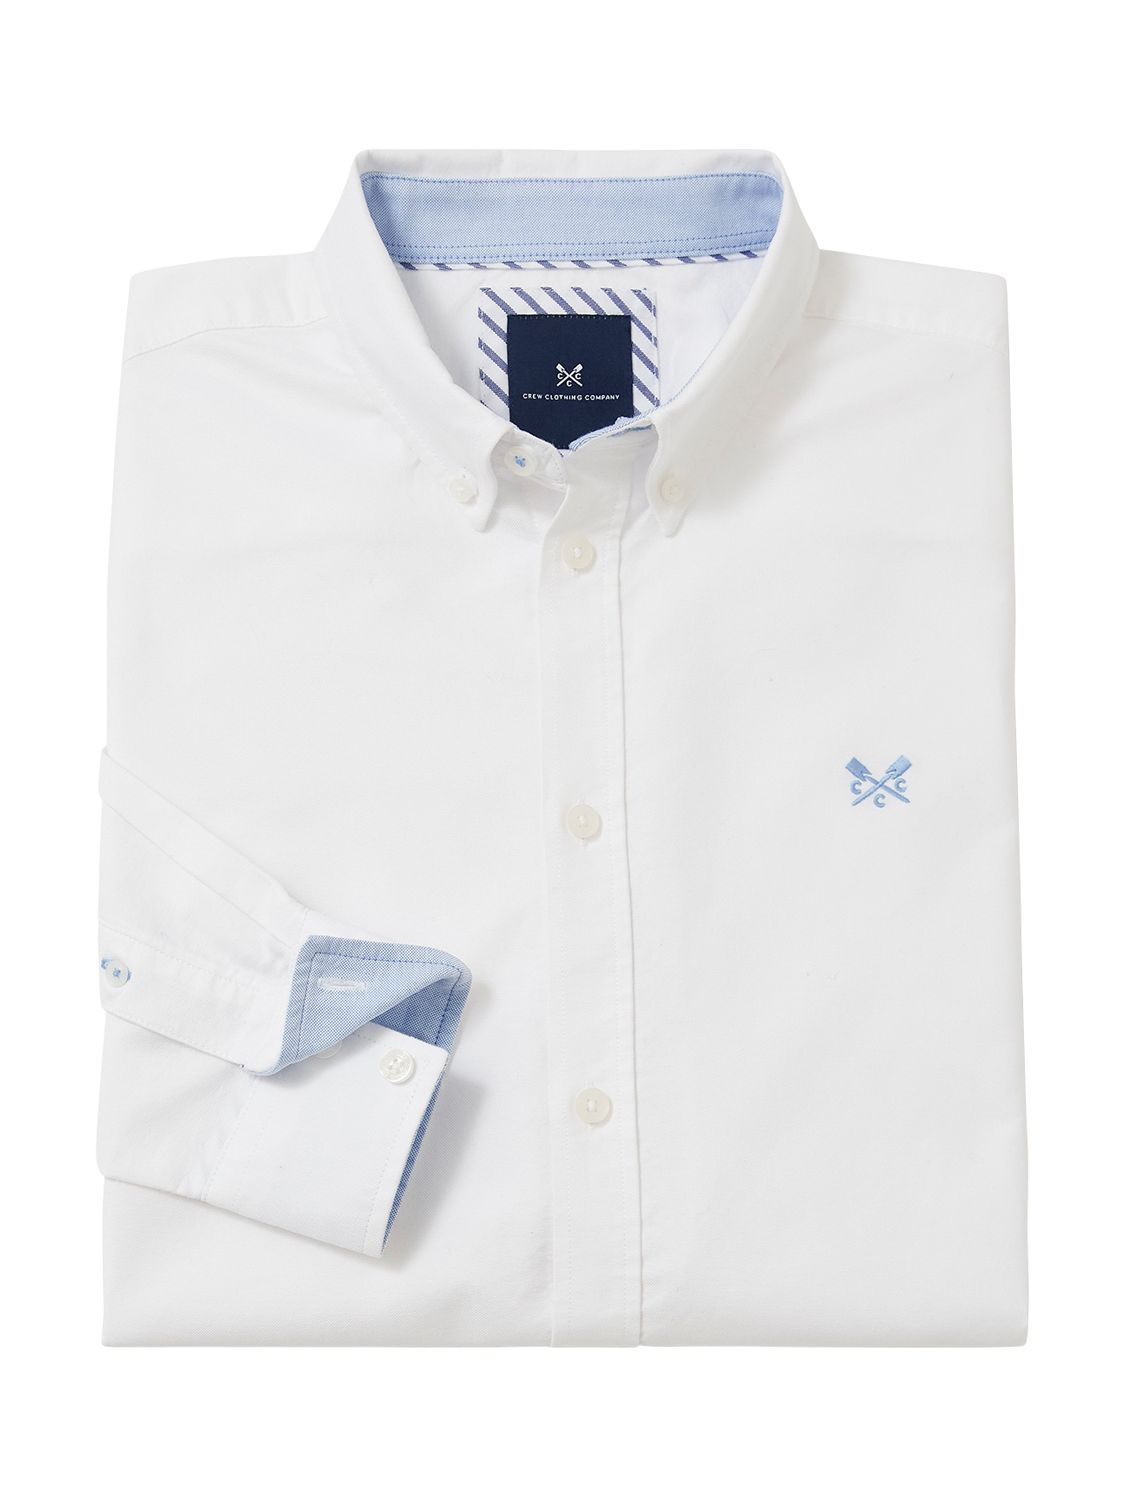 Crew Clothing Slim Fit Oxford Shirt, Bright White, L